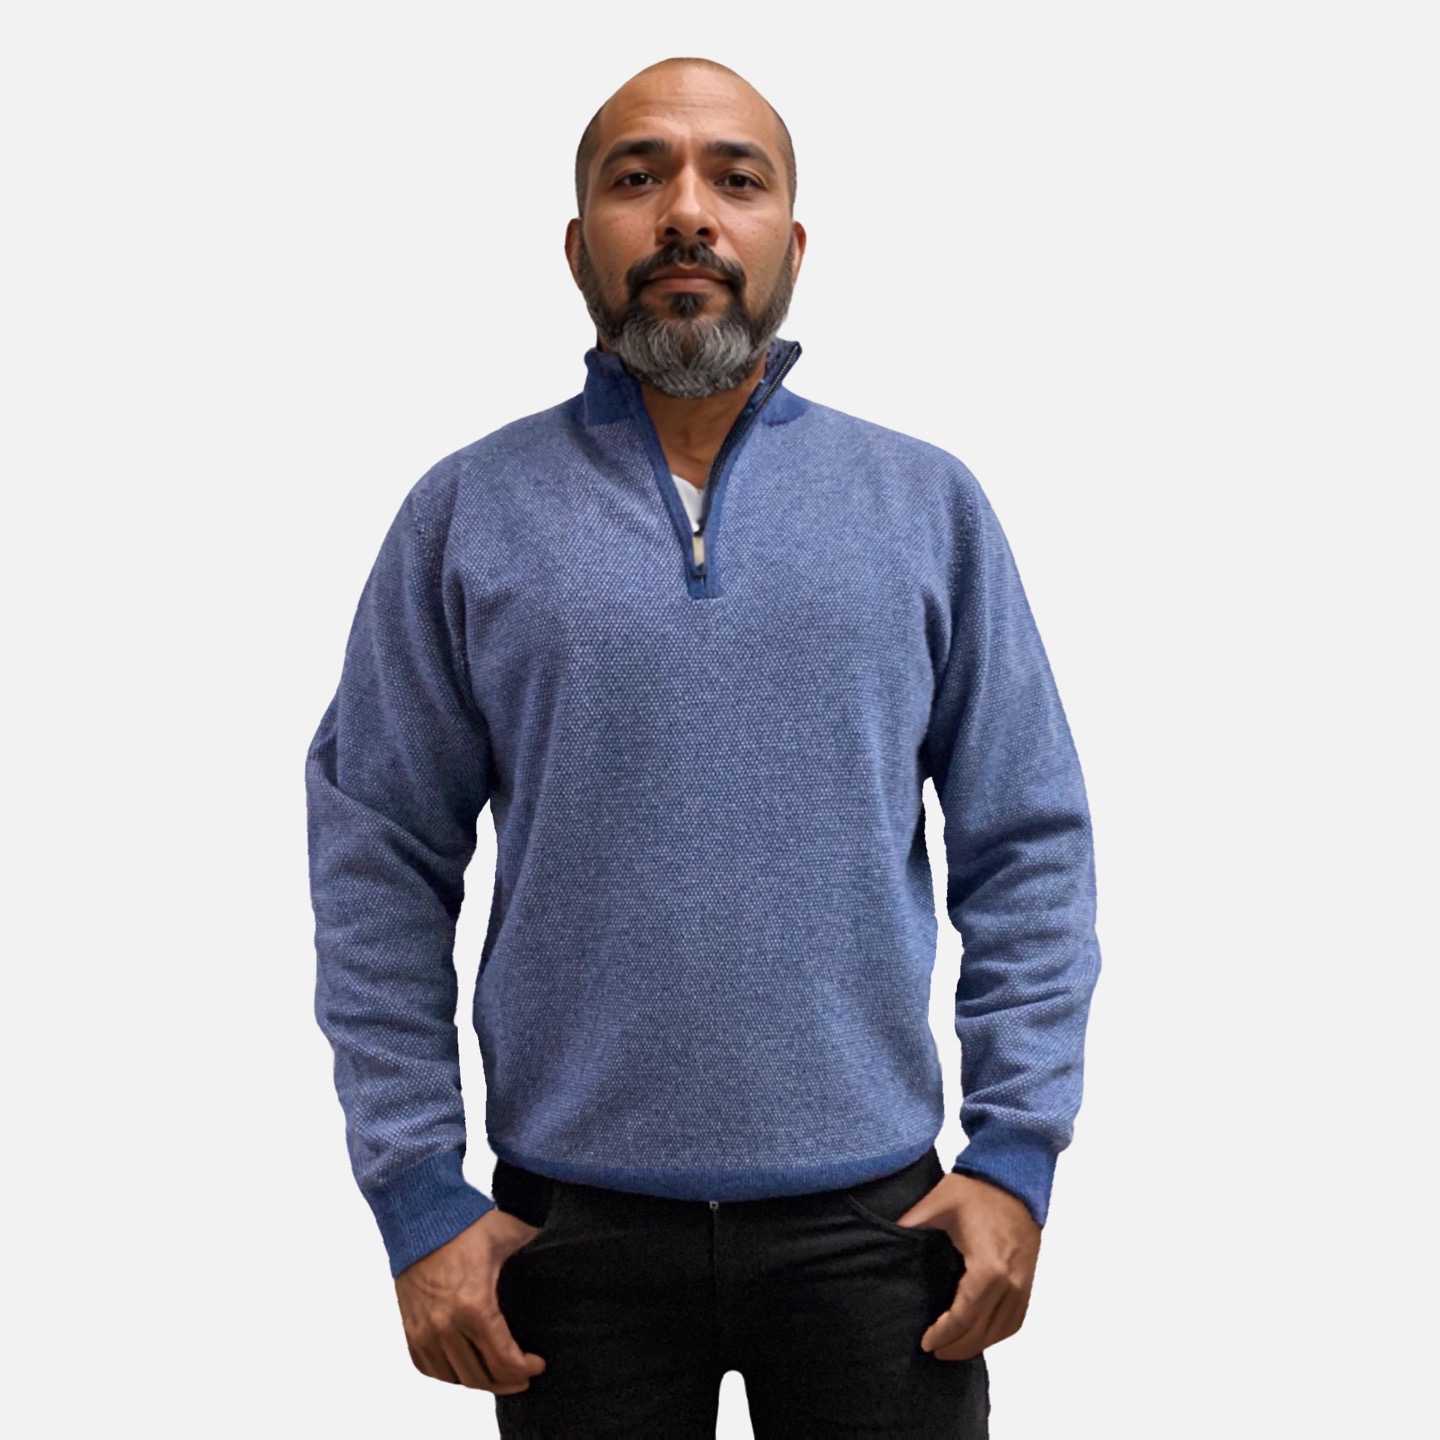 Merino Wool Birdseye Quarter Zip Pullover Sweater for Men - Nordic Blue -  Classic Fit - L